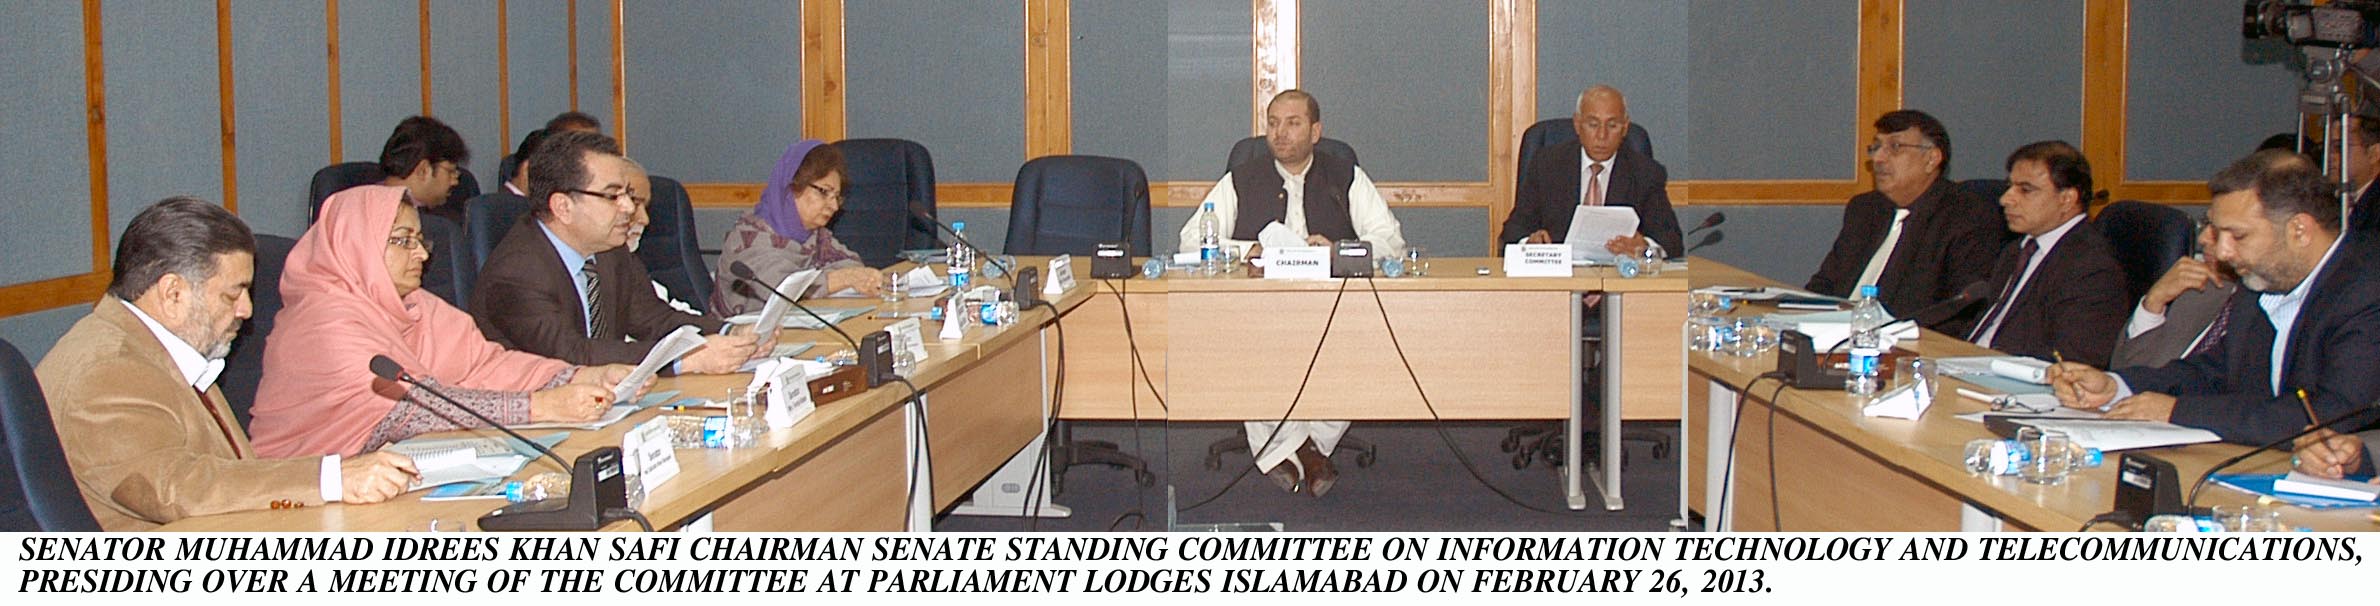 Muhammad Idrees Khan Safi as a Chairman Senate